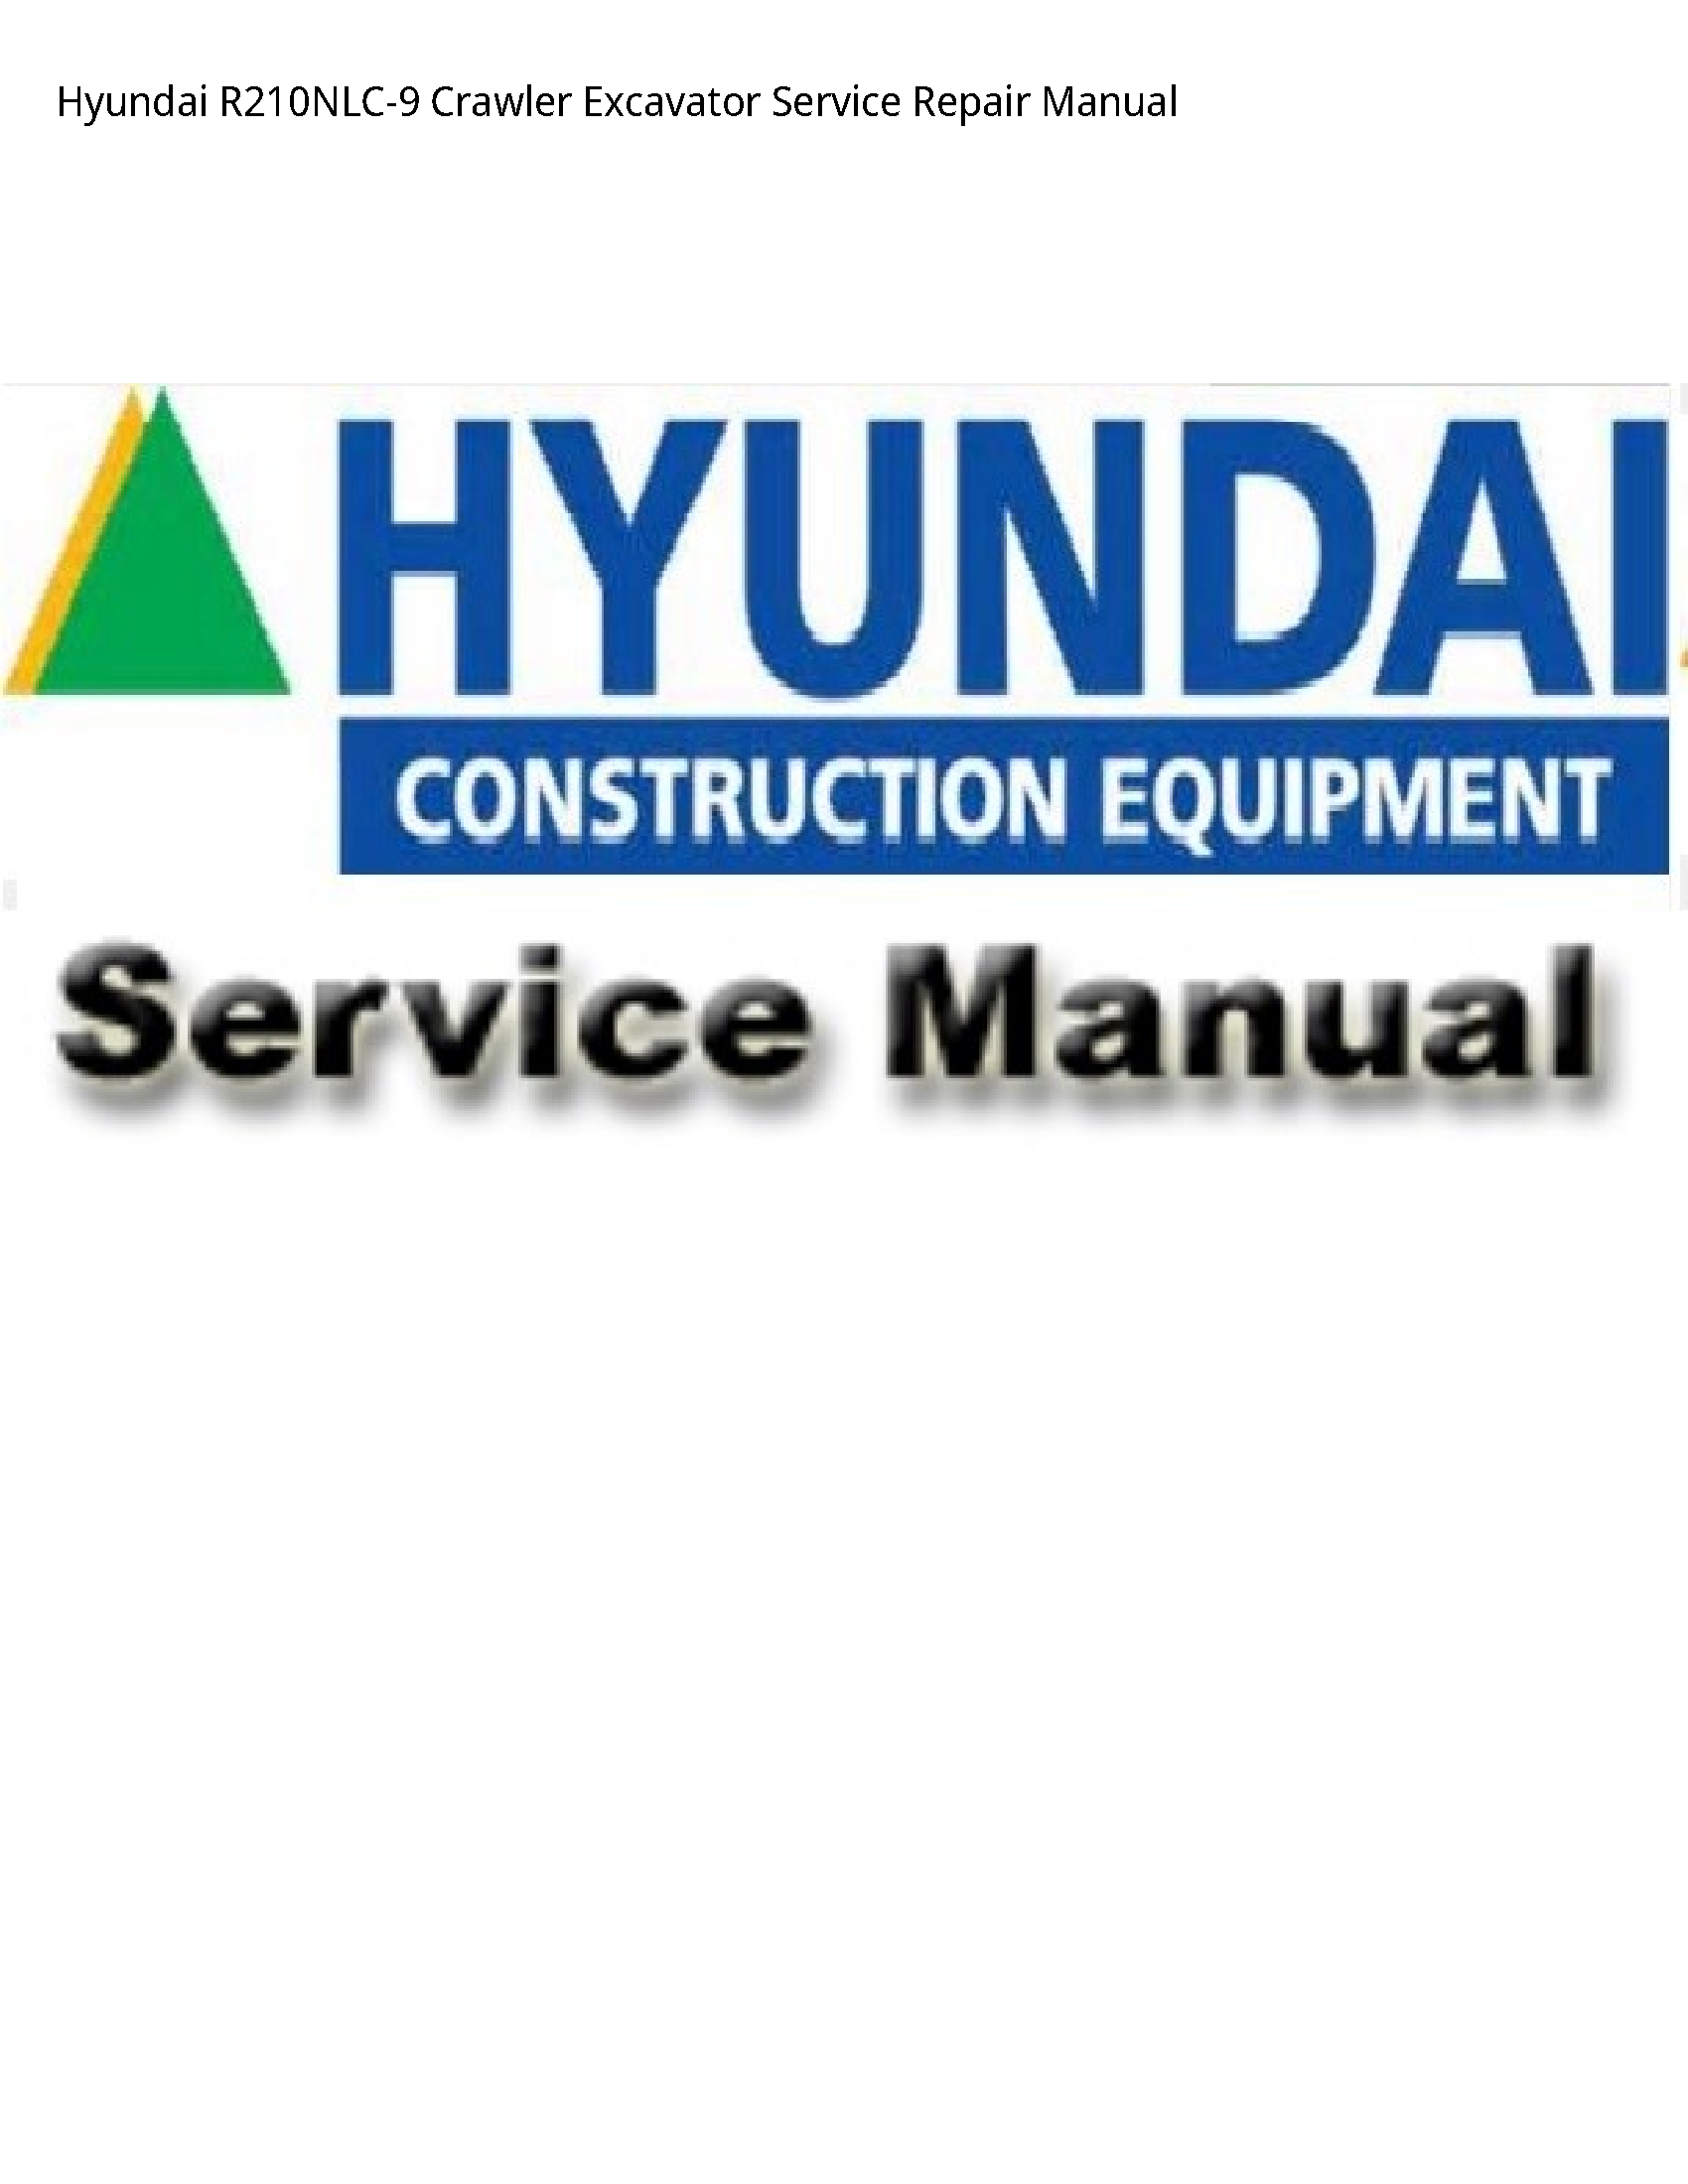 Hyundai R210NLC-9 Crawler Excavator manual